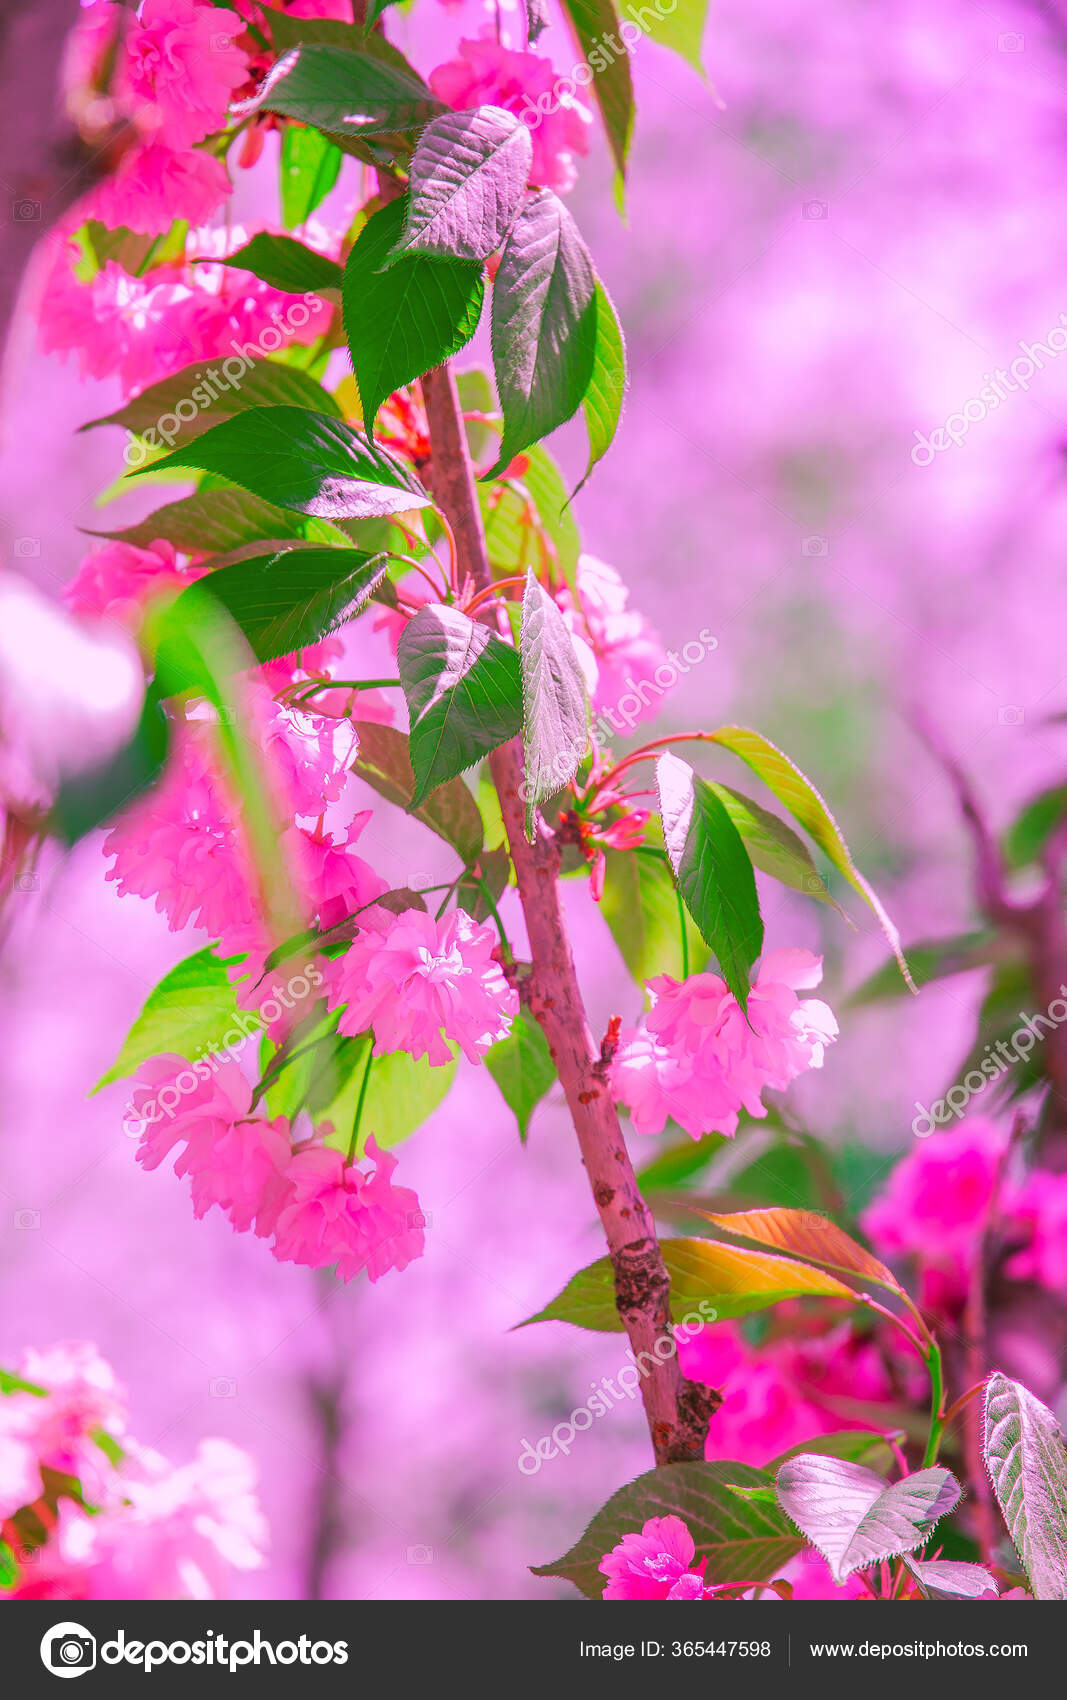 Fashion Wallpaper. Pink Flowers Aesthetics. Cherry Blossom Tree